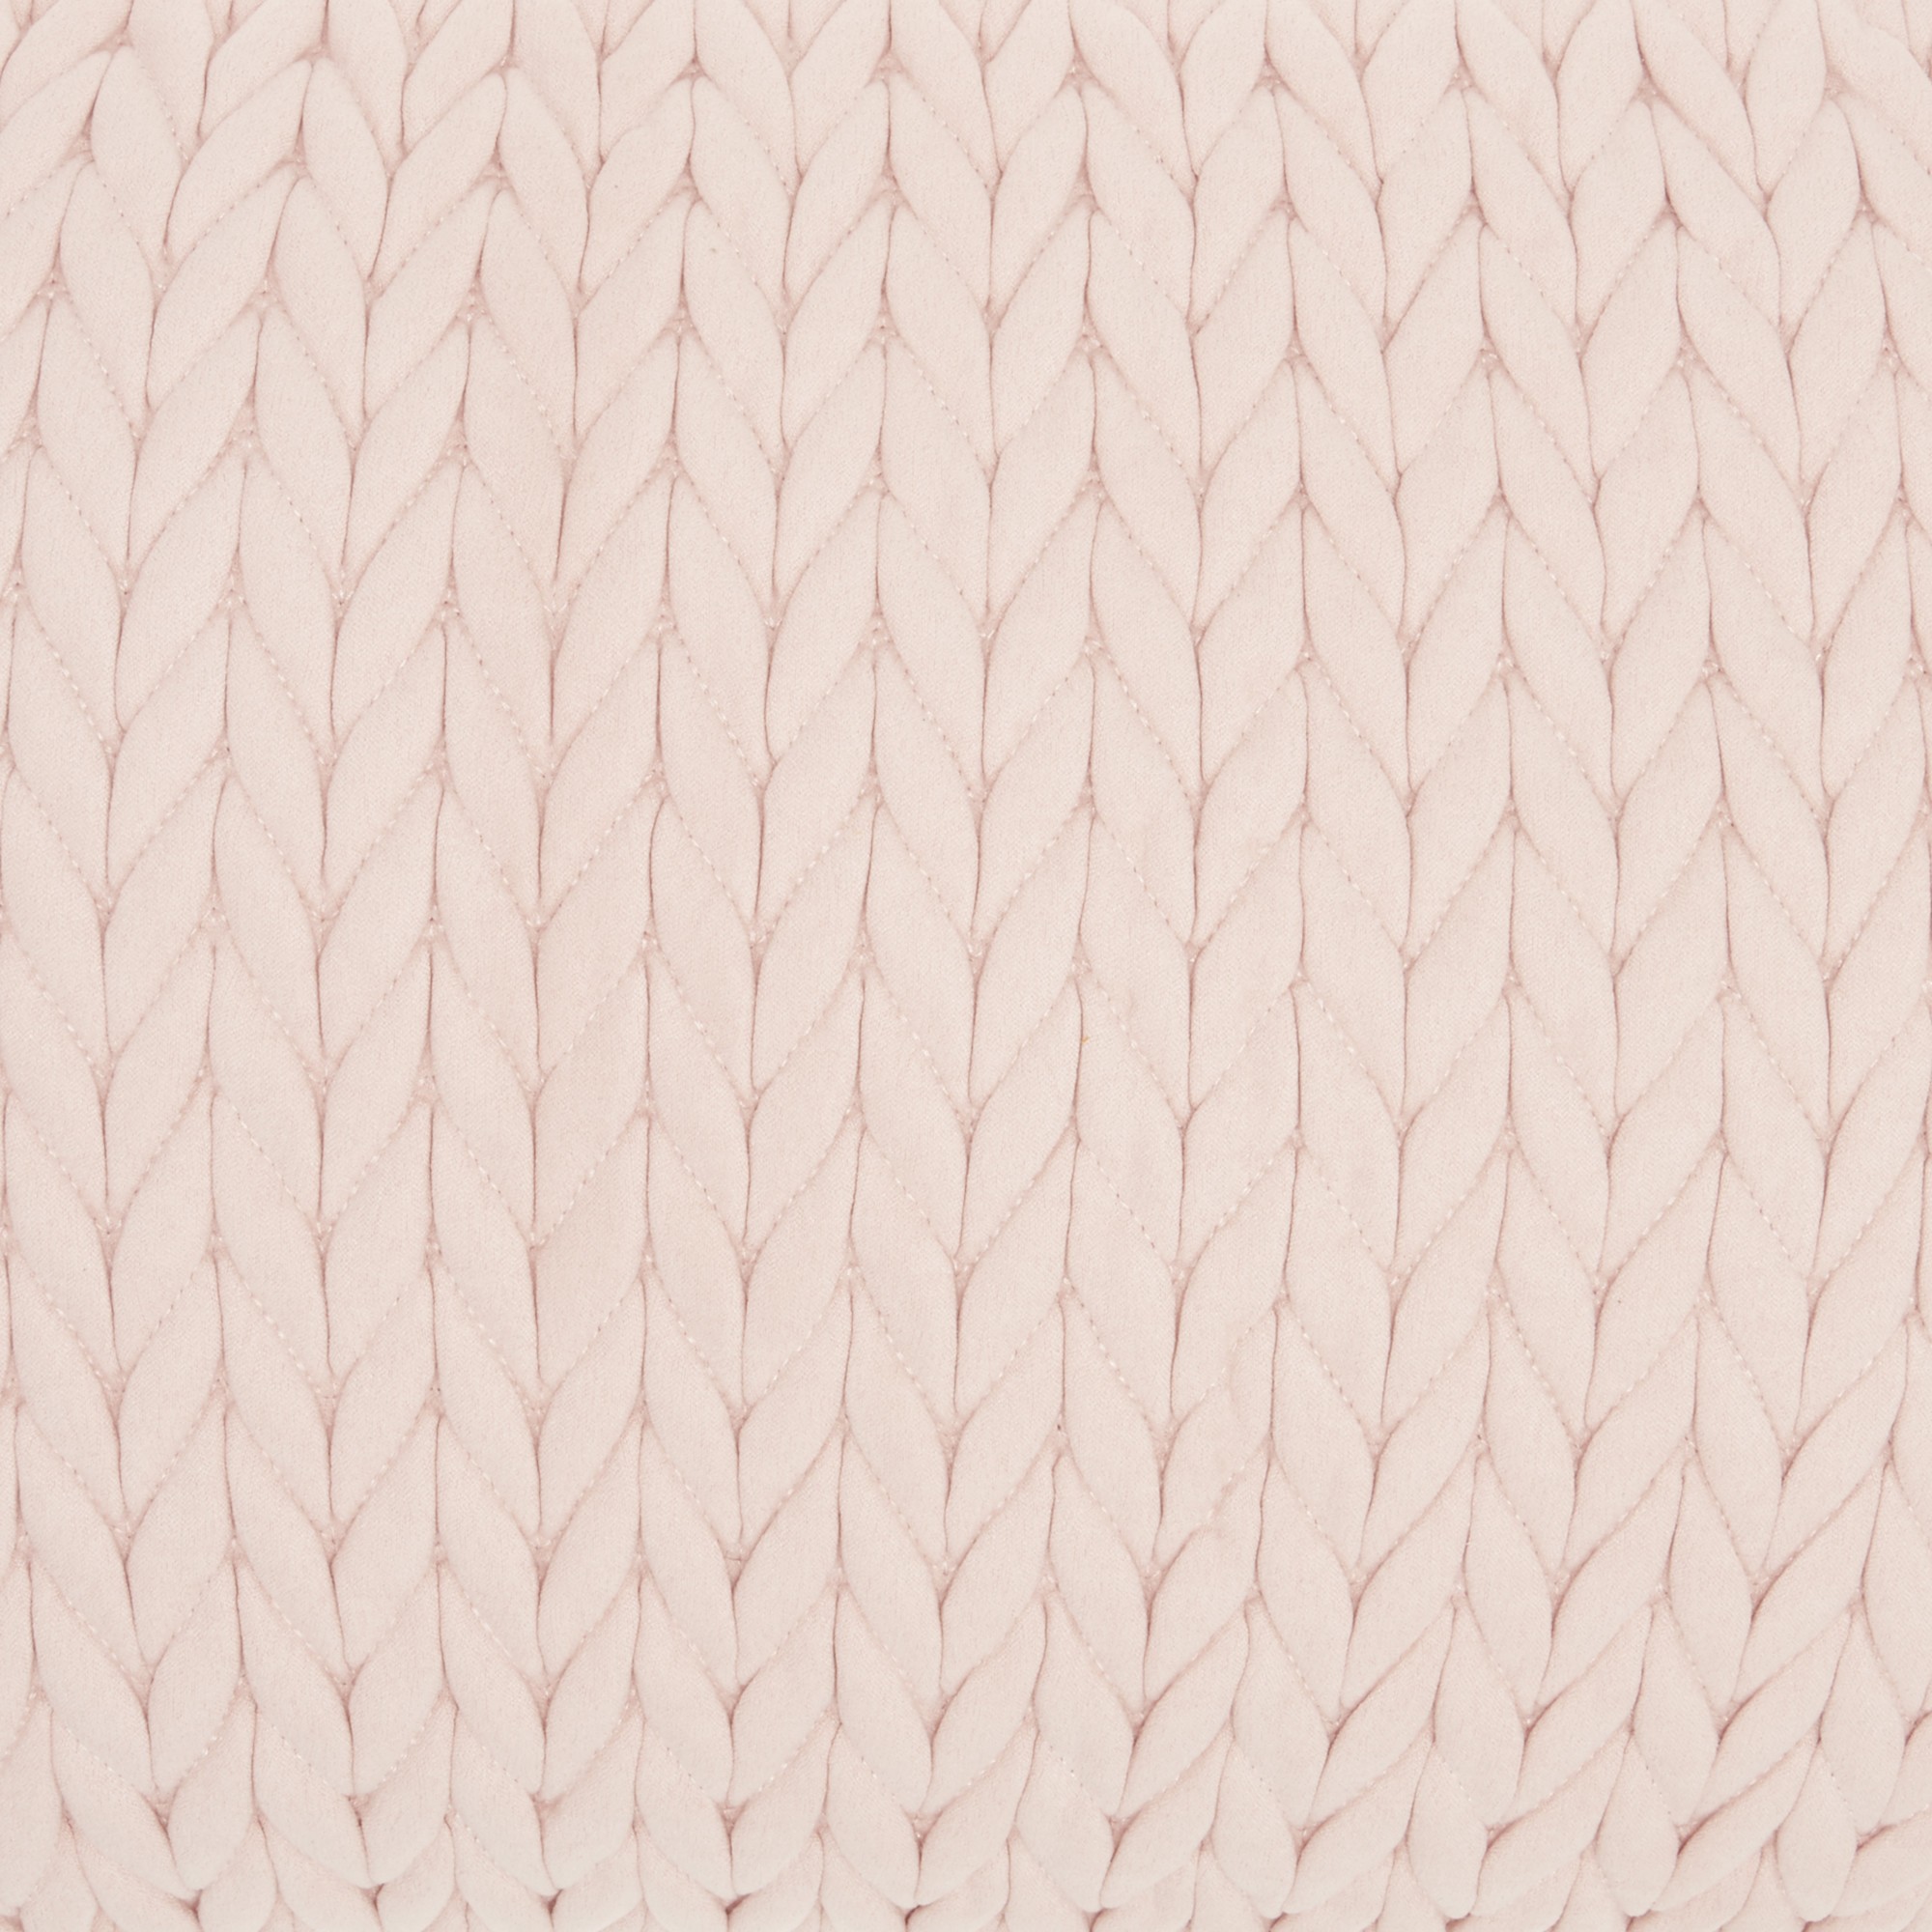 Blush Pink Chunky Braid Lumbar Pillow